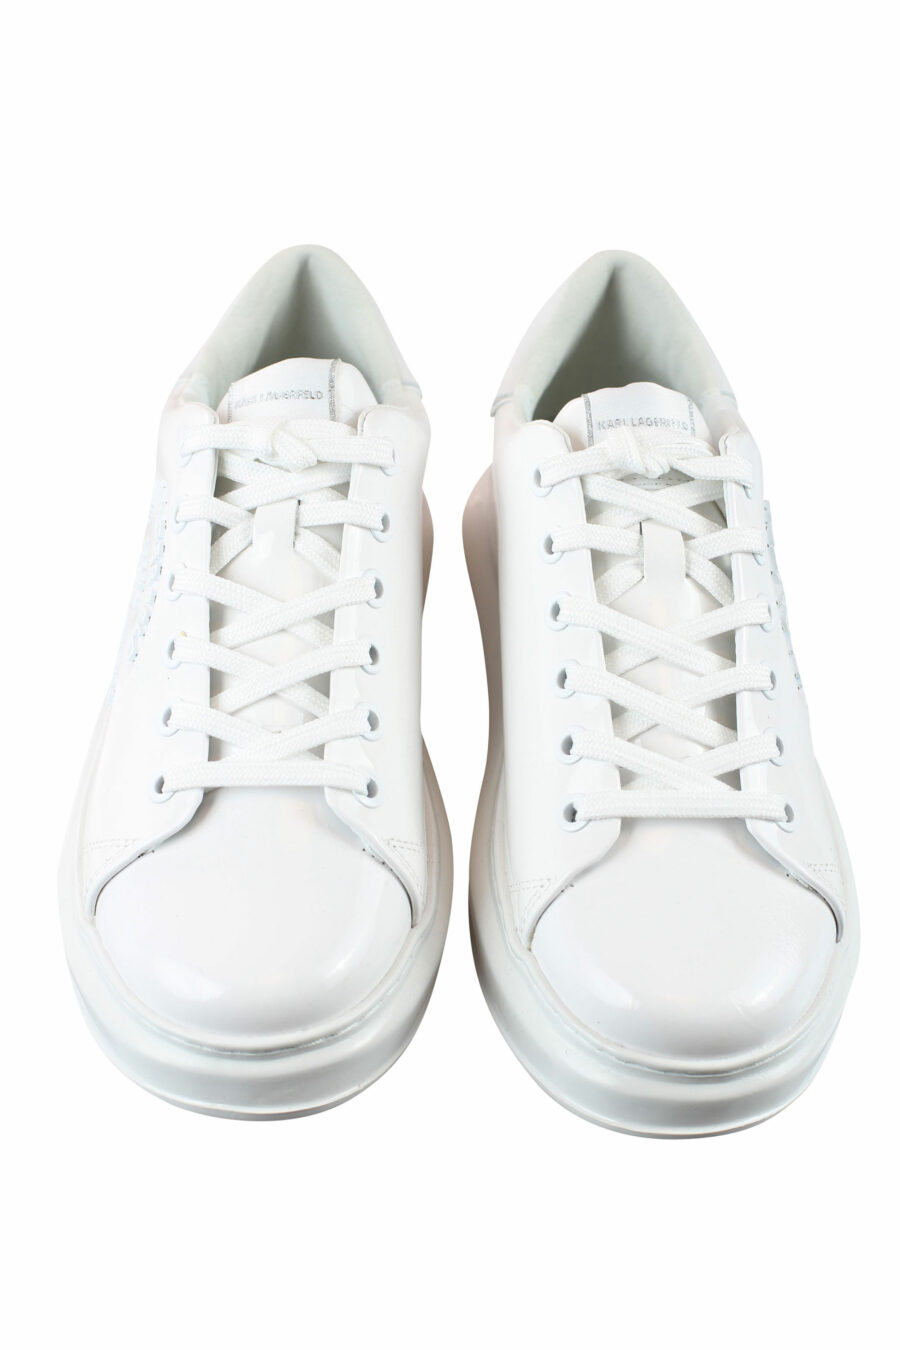 Zapatillas blancas brillantes con logo lettering "rue st guillaume" - IMG 9981